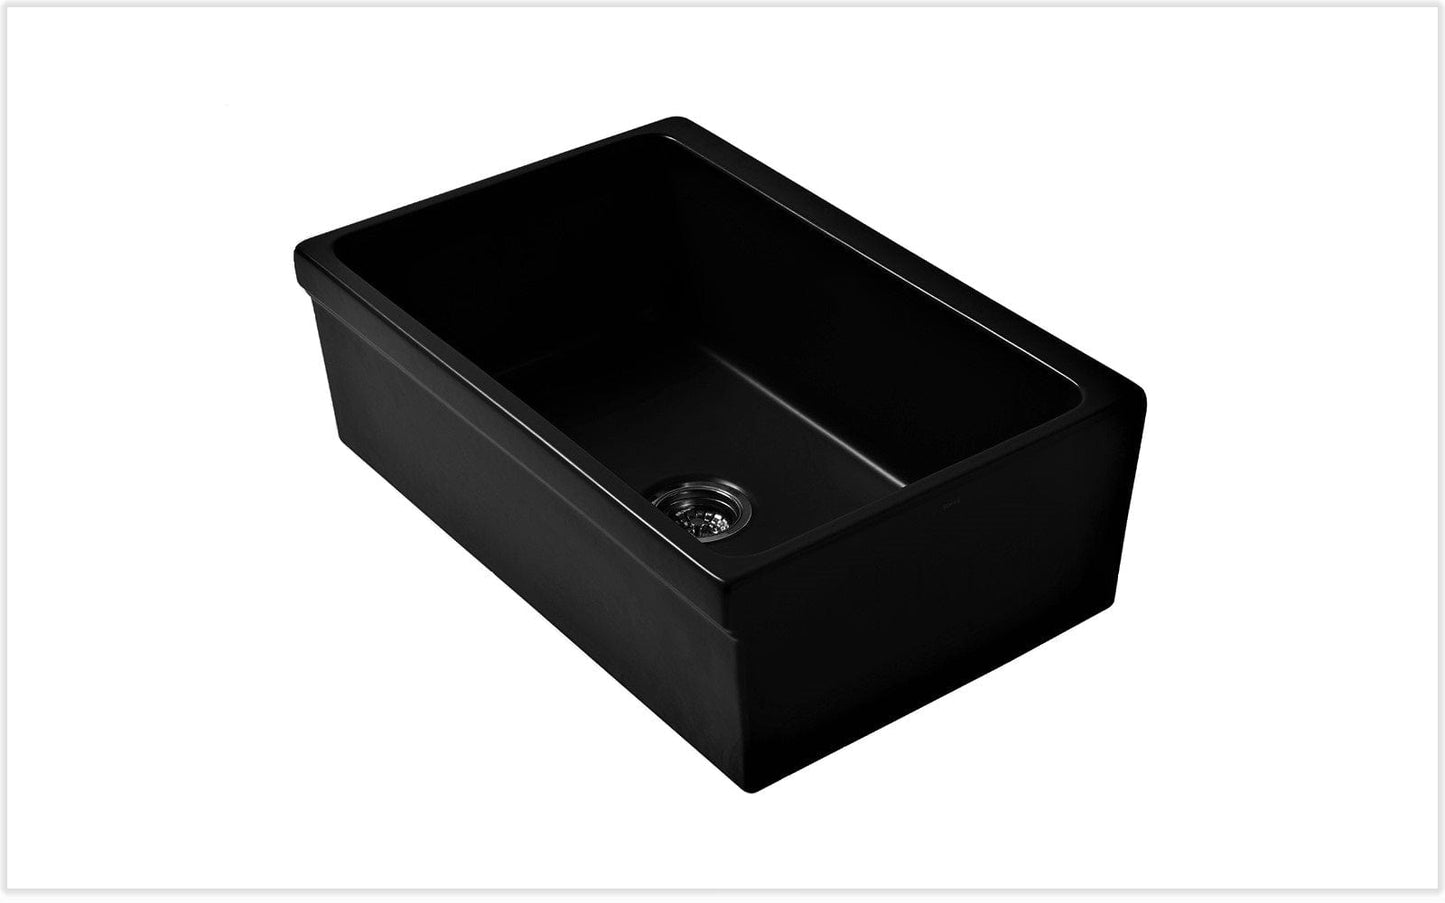 WHITEHAUS 30" Glencove Fireclay Reversible Sink WHQ5530-BLACK